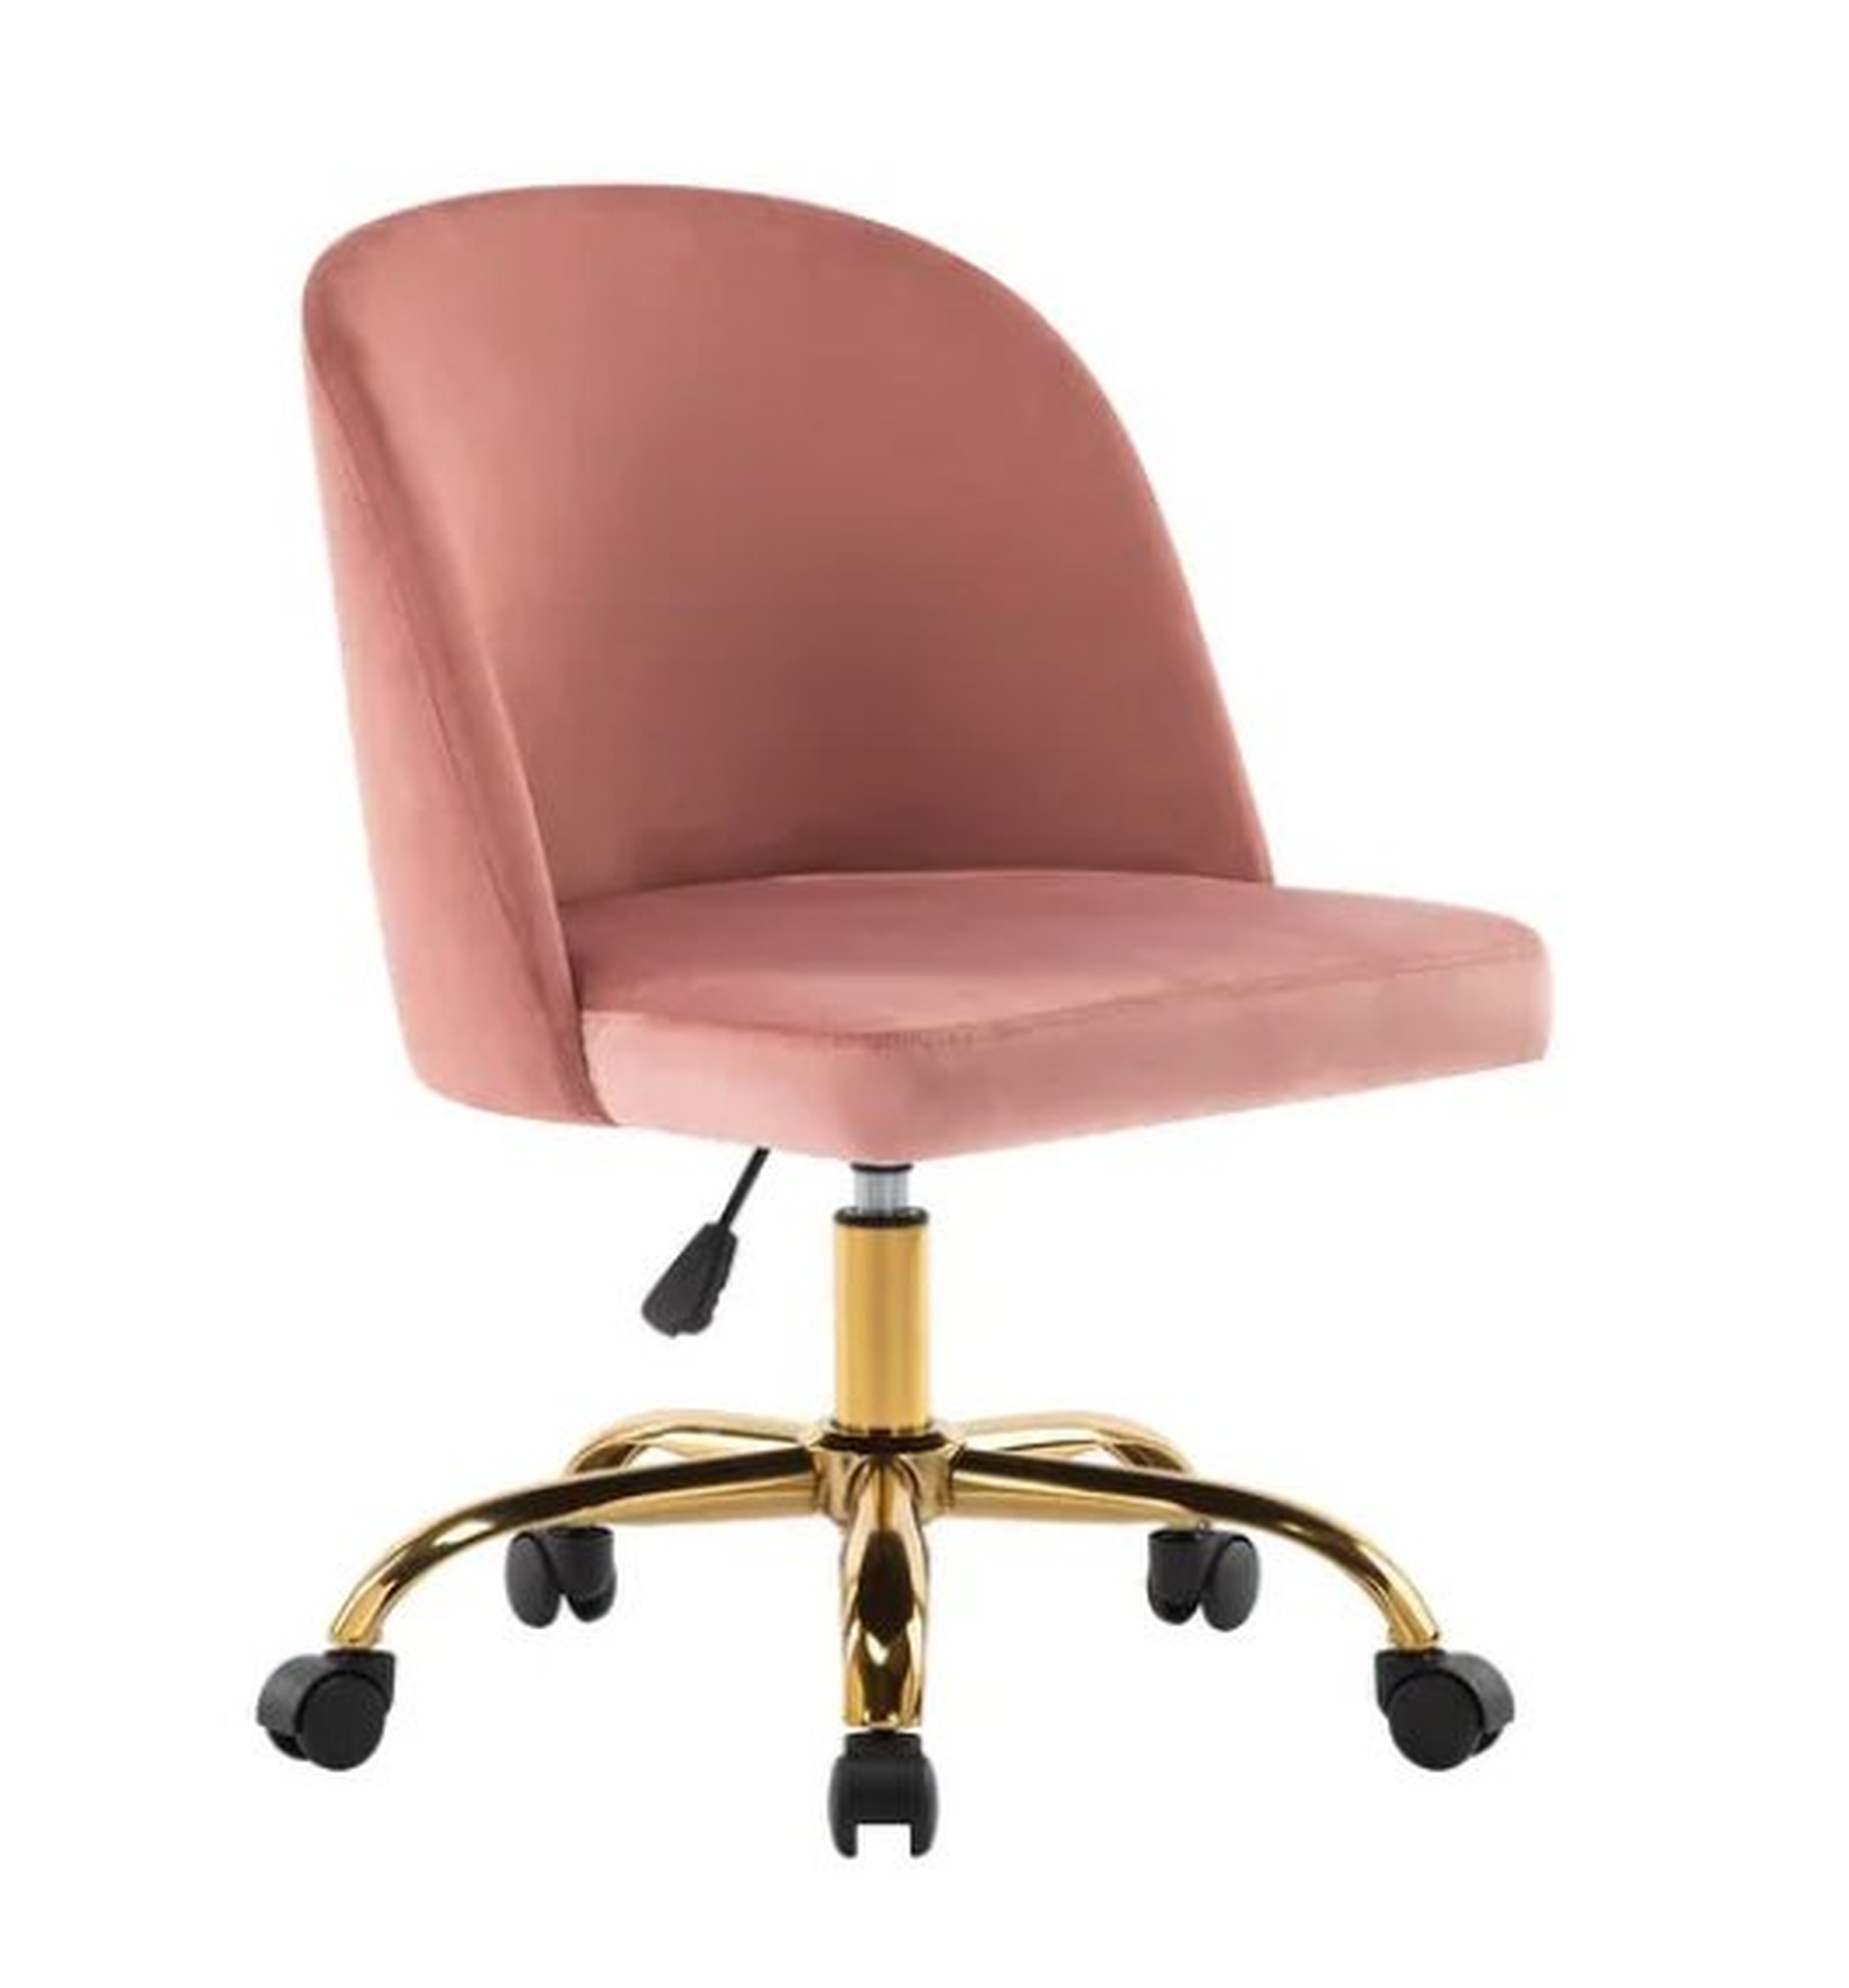 Porthos Home Louie Armless Velvet Desk Chairs, Gold Chrome Legs - Pink - Overstock